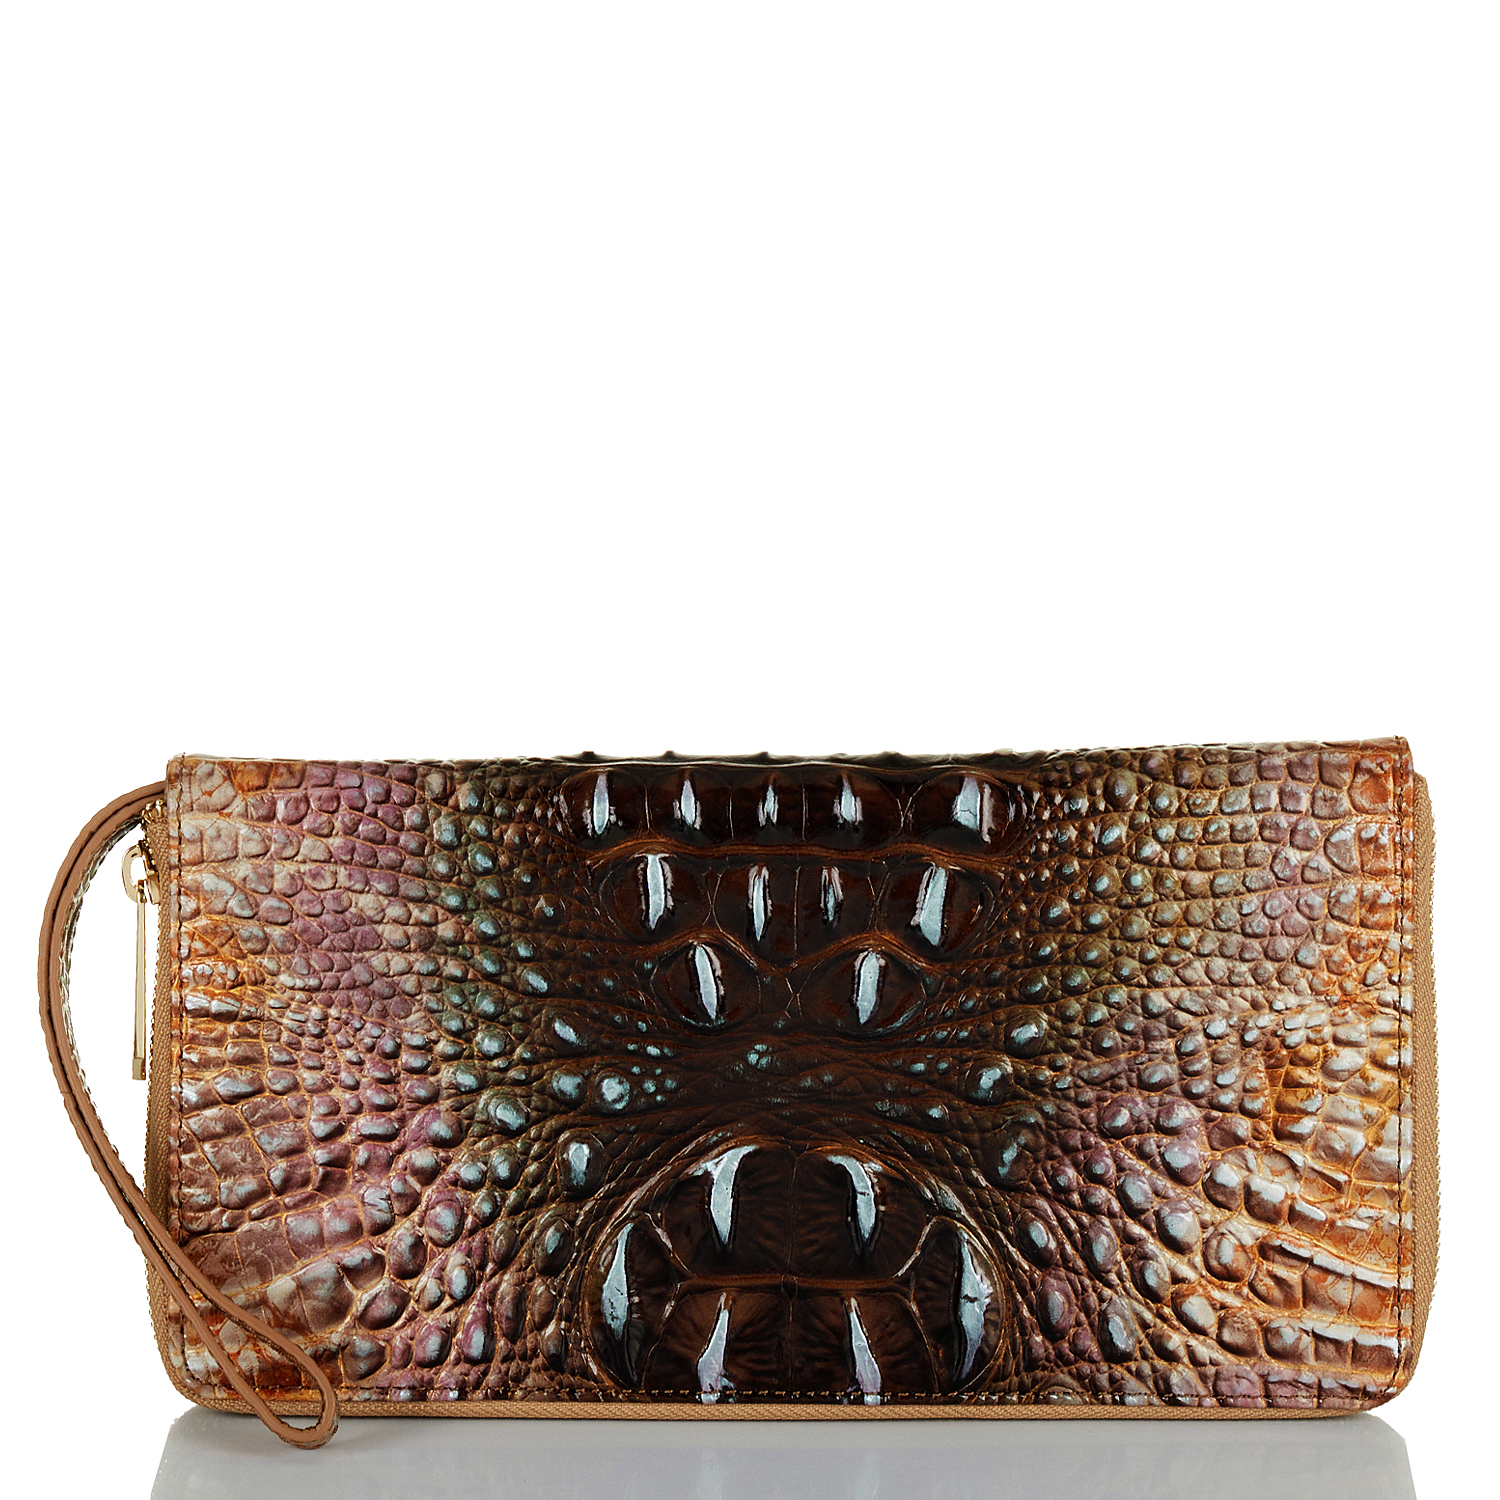 Brahmin Handbags - Truffle Python Ombre Melbourne, a luxurious